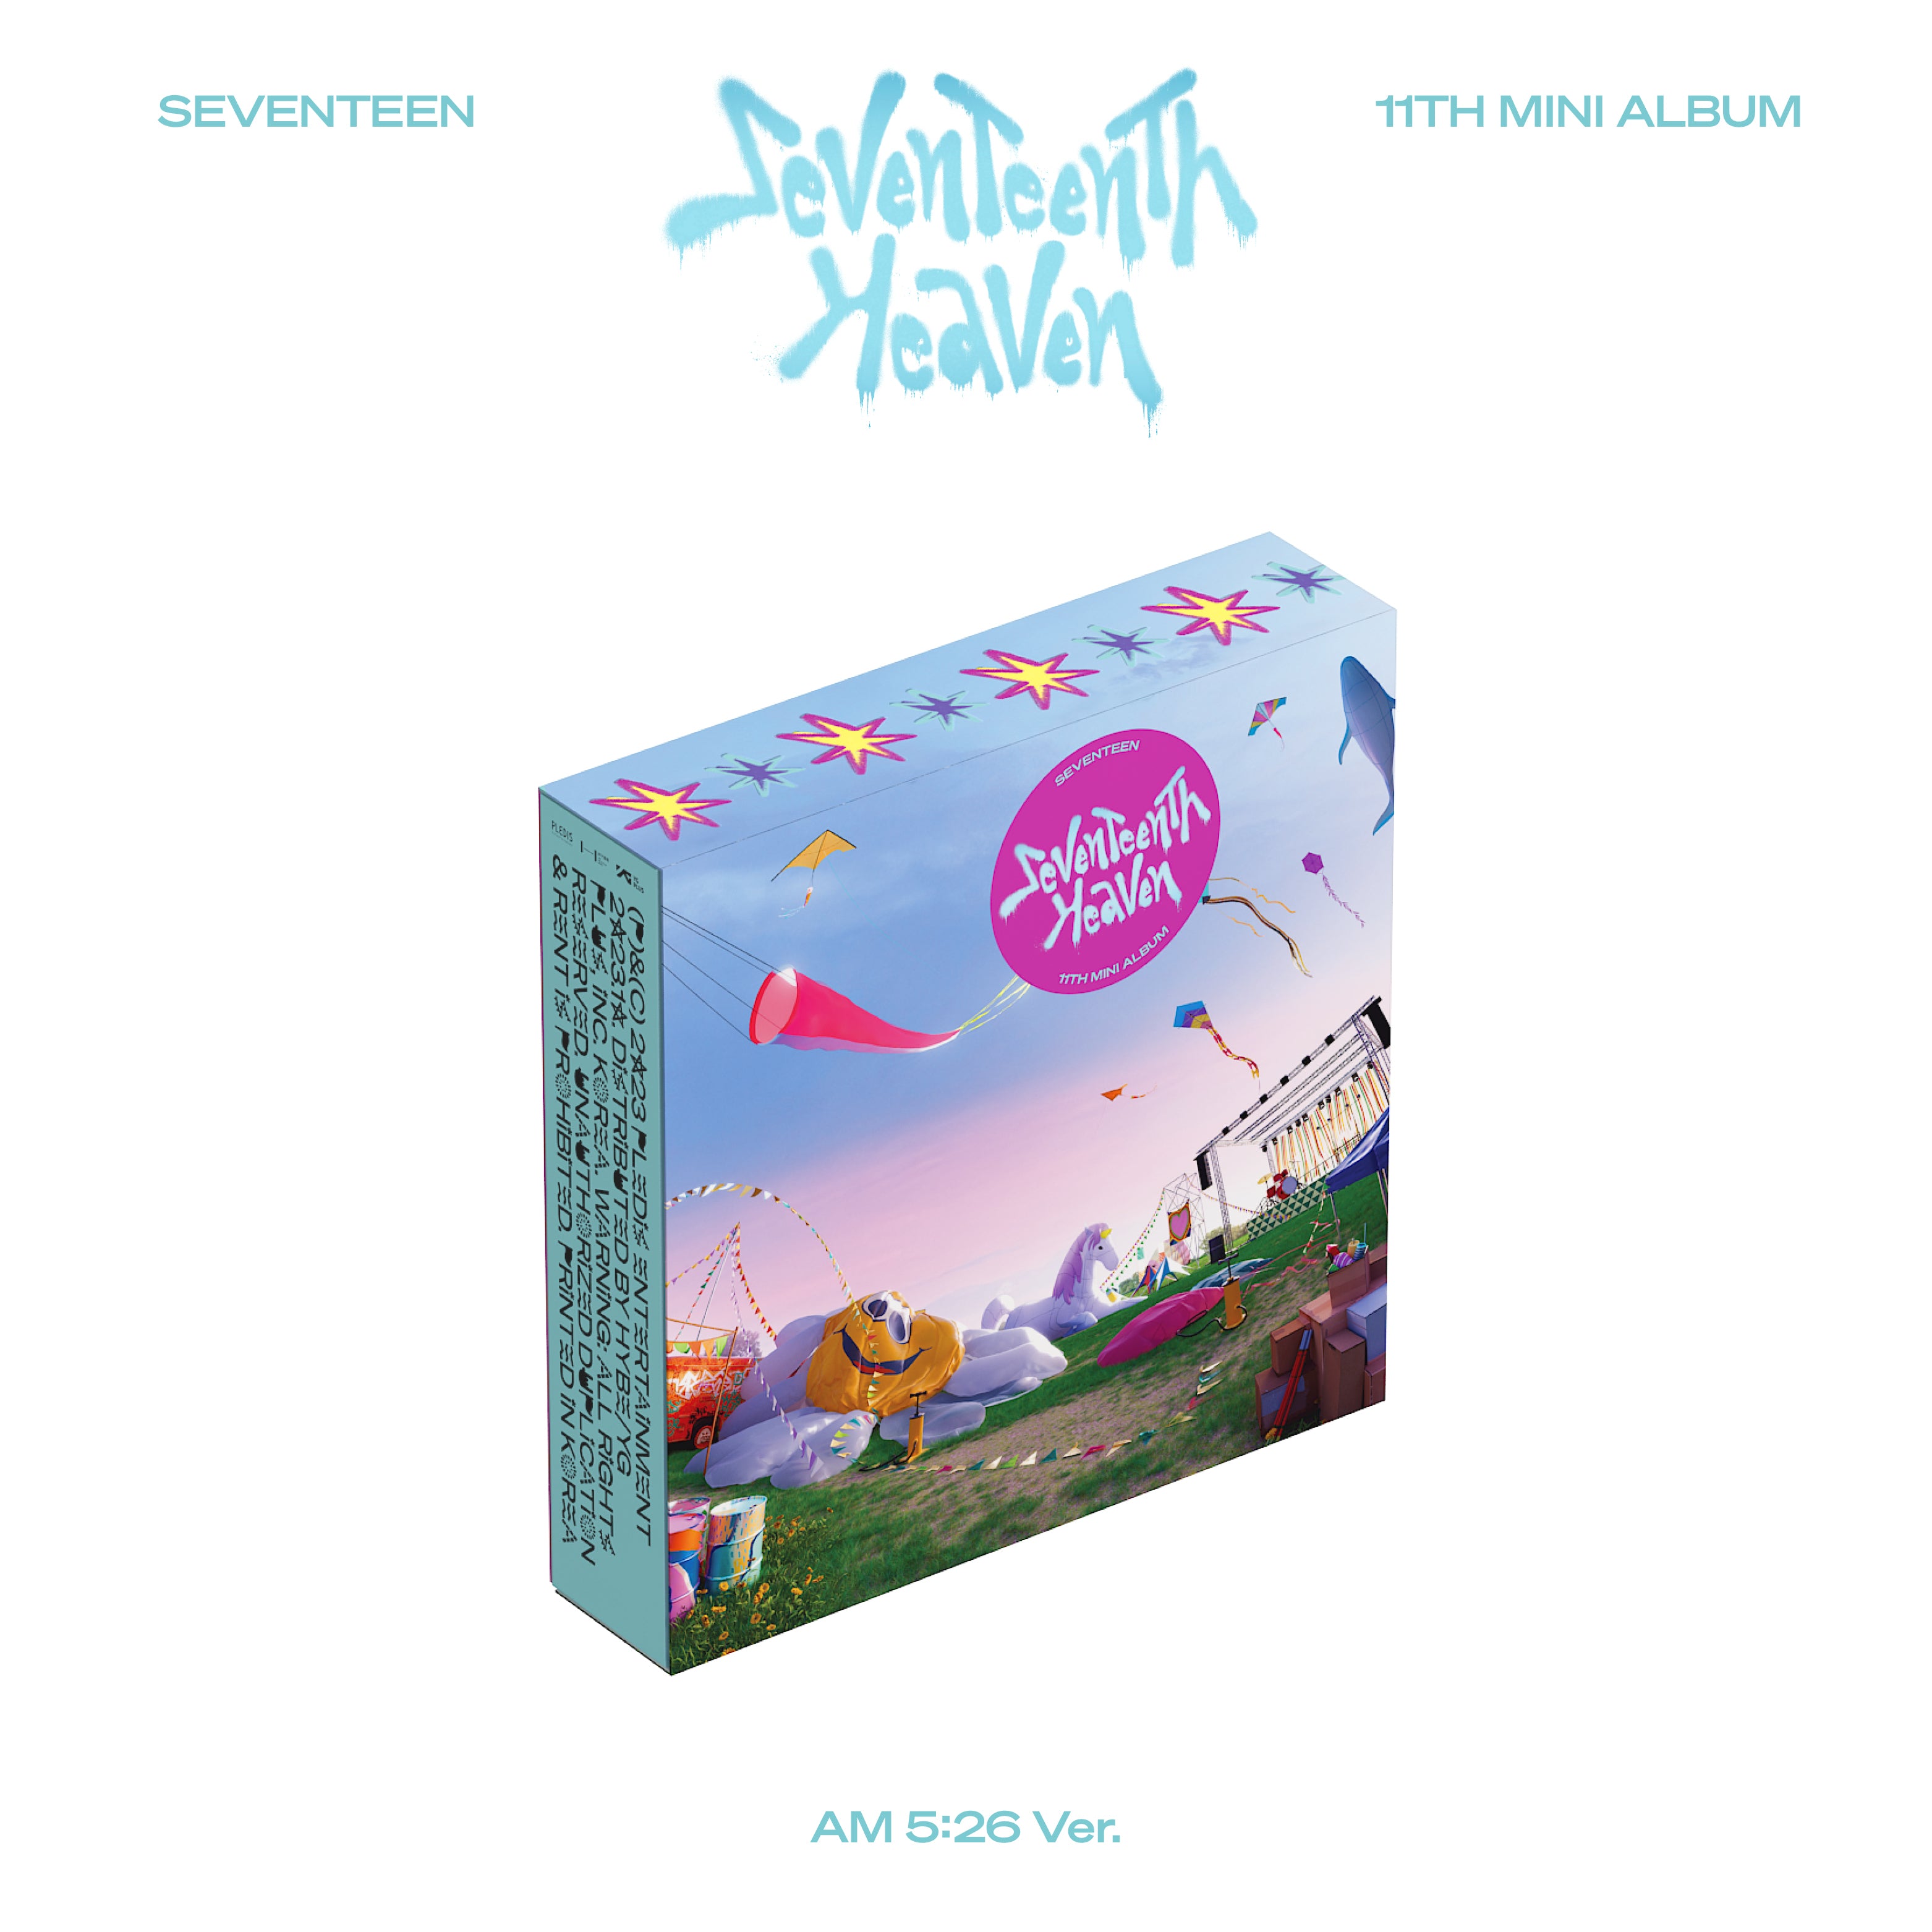 SEVENTEEN 11th Mini Album 'SEVENTEENTH HEAVEN' AM 5:26 Ver